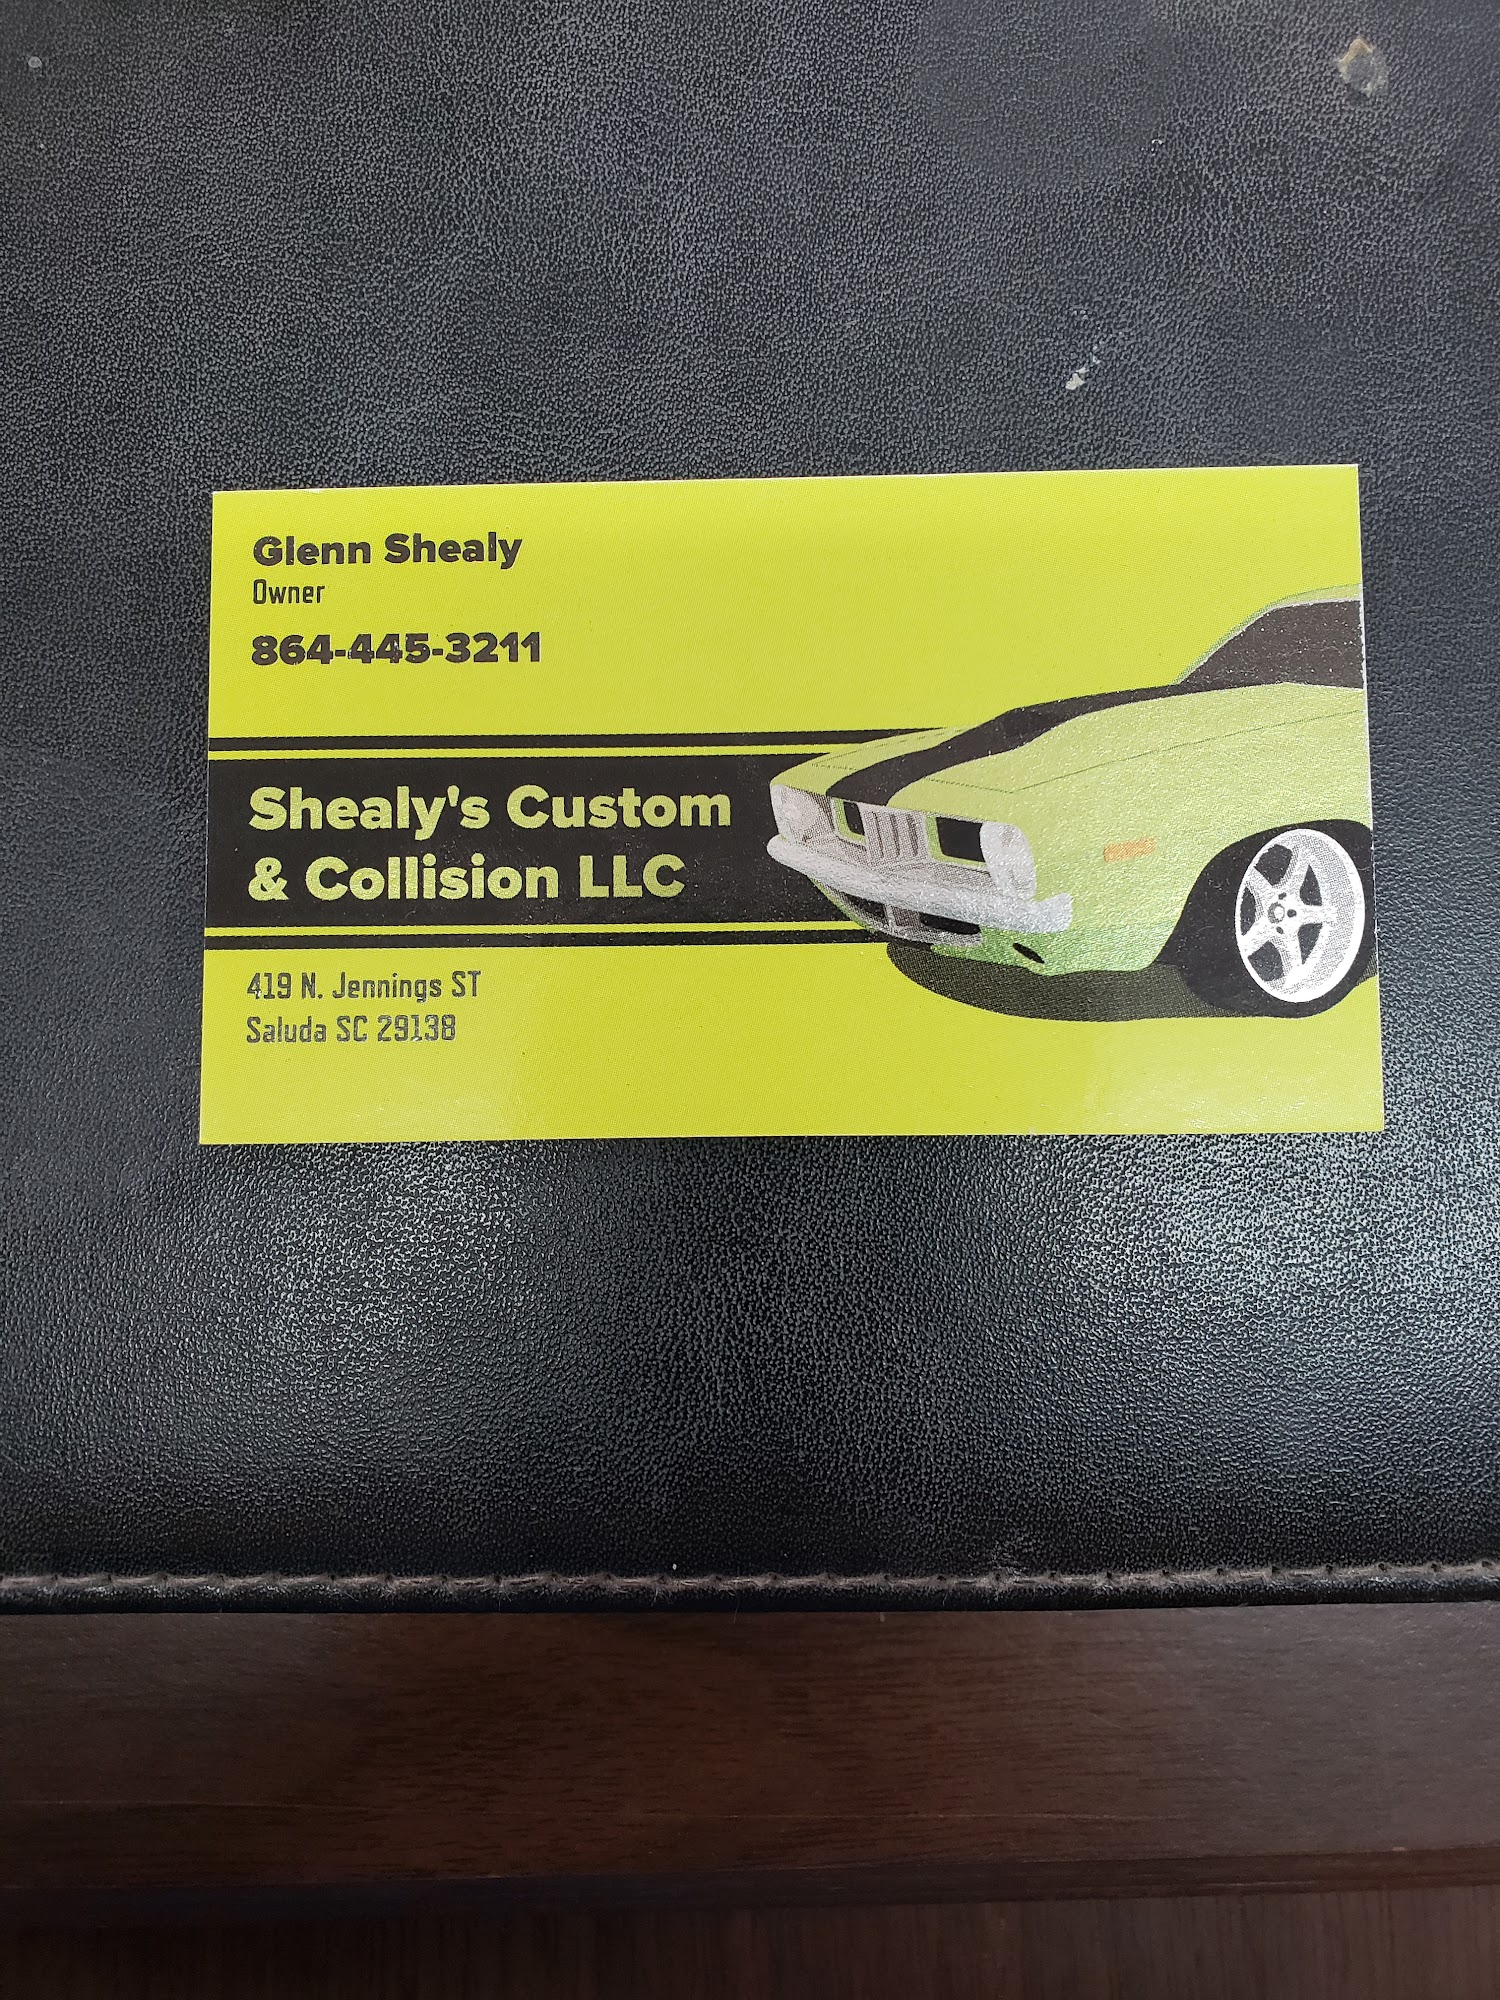 Shealy's Custom & Collision LLC